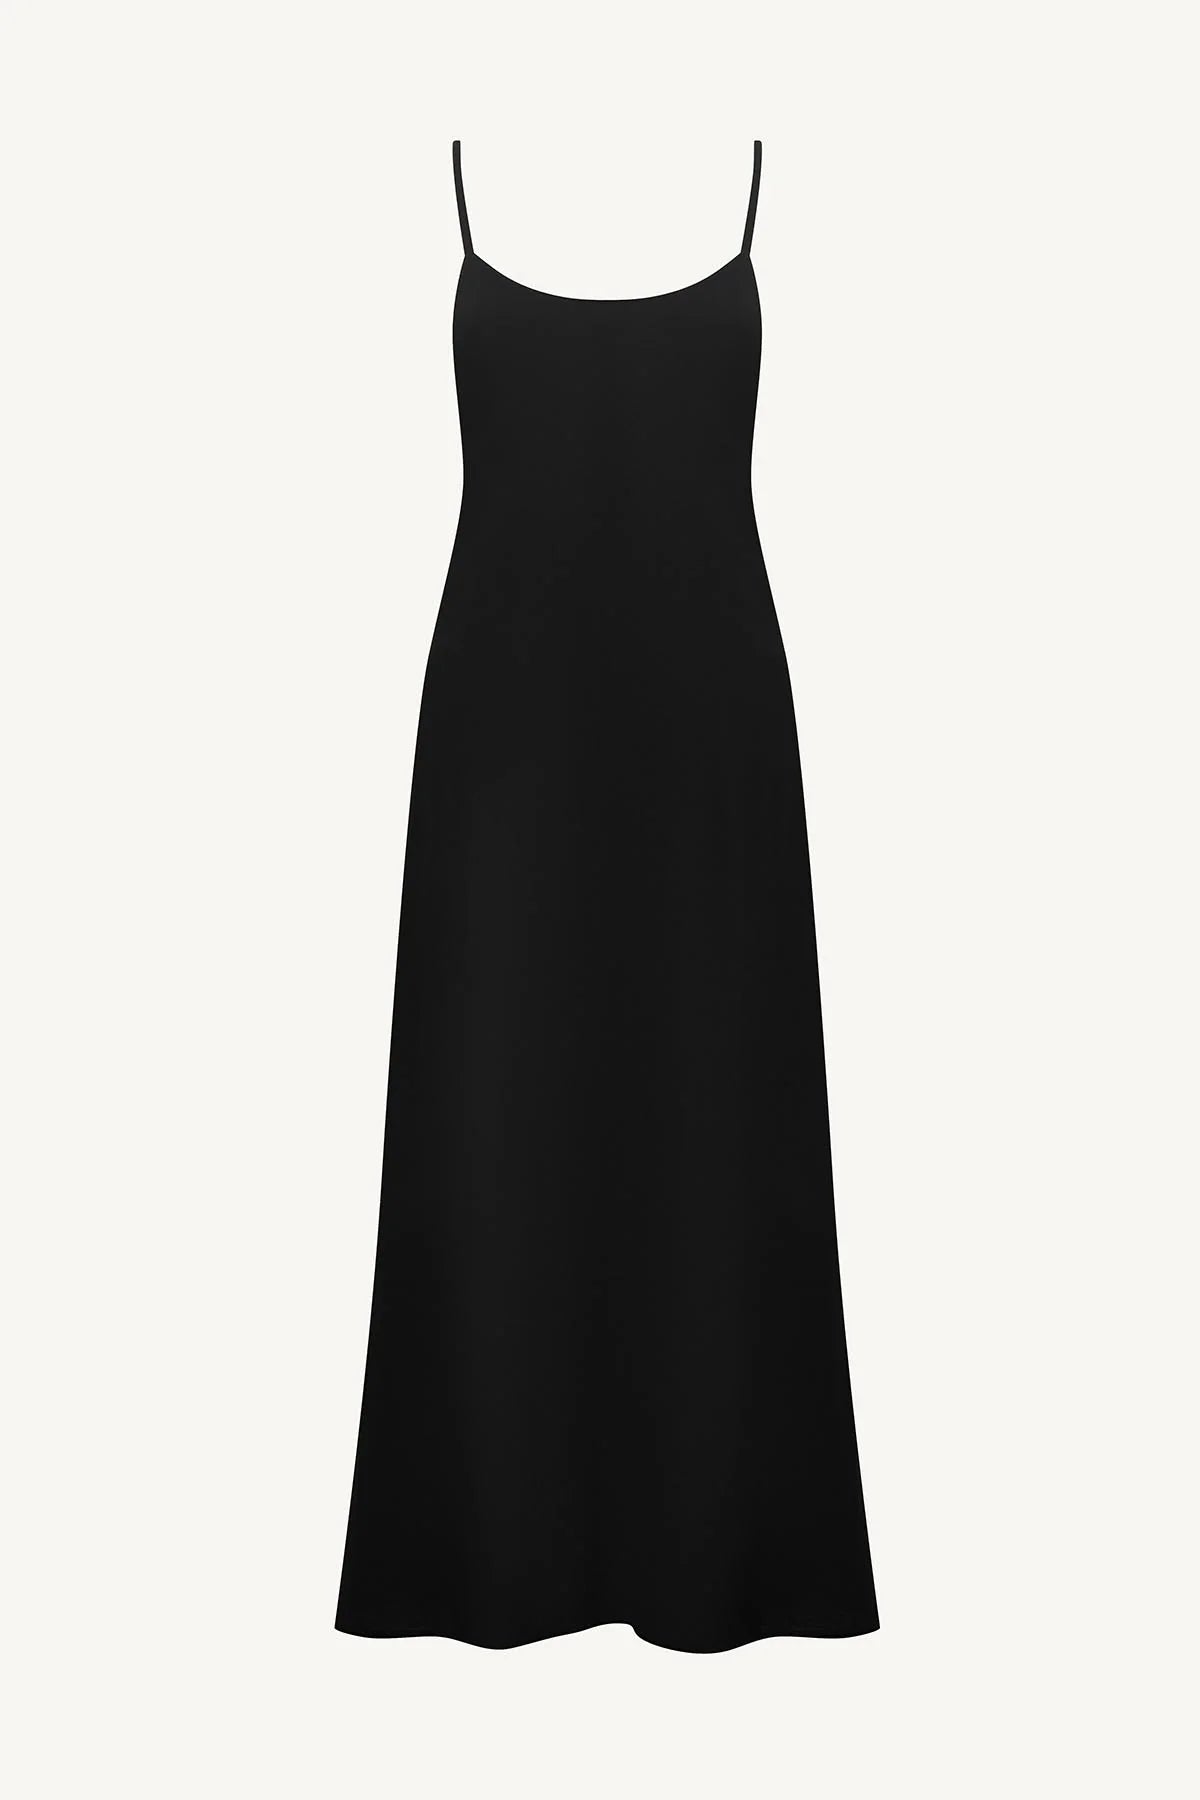 Vitamin A Mari Maxi Dress in Black Crinkle Linen